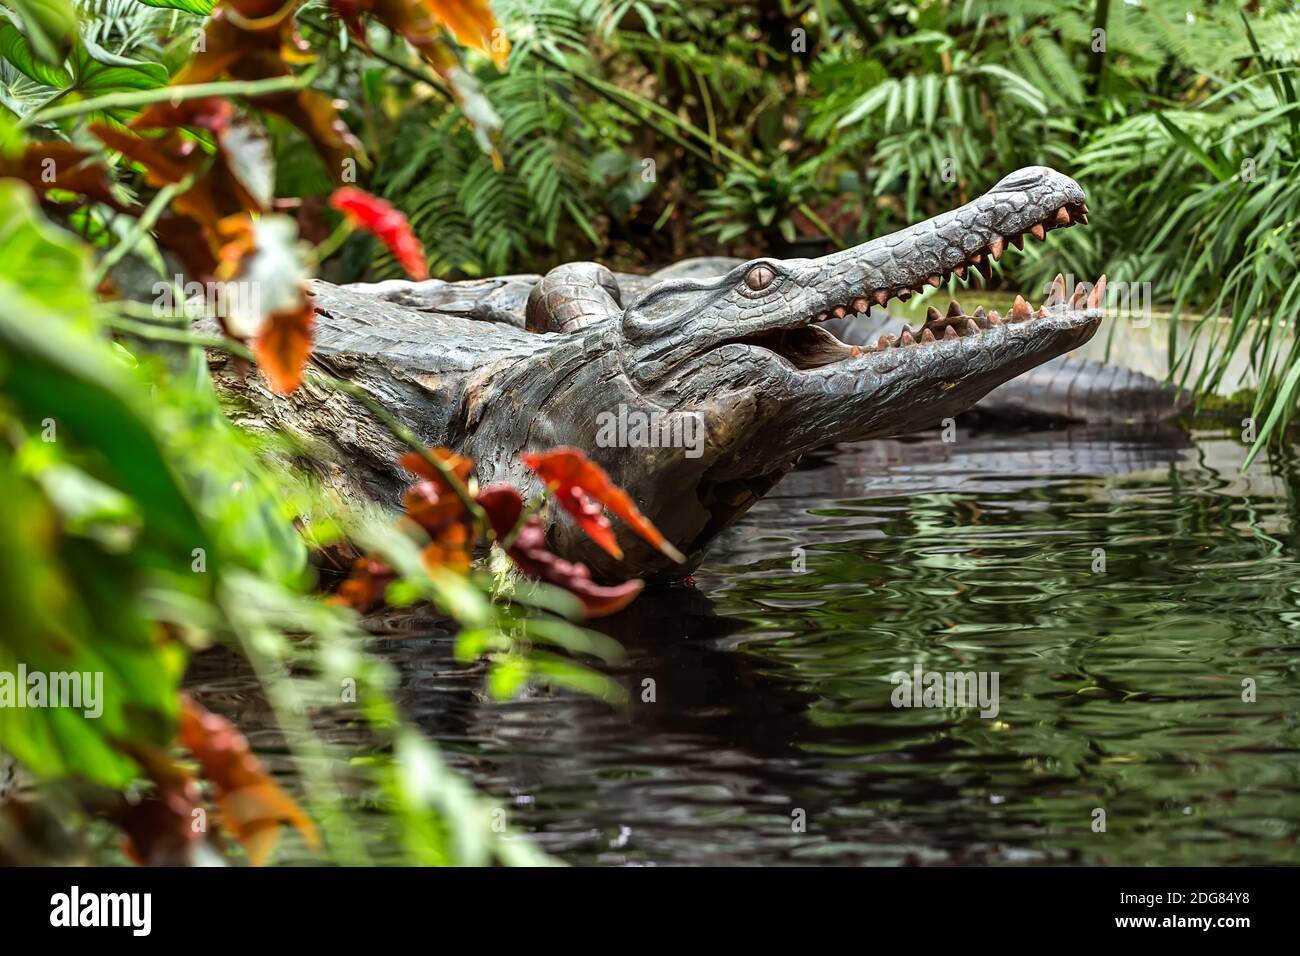 Crocodile sculpture in water Stock Photo